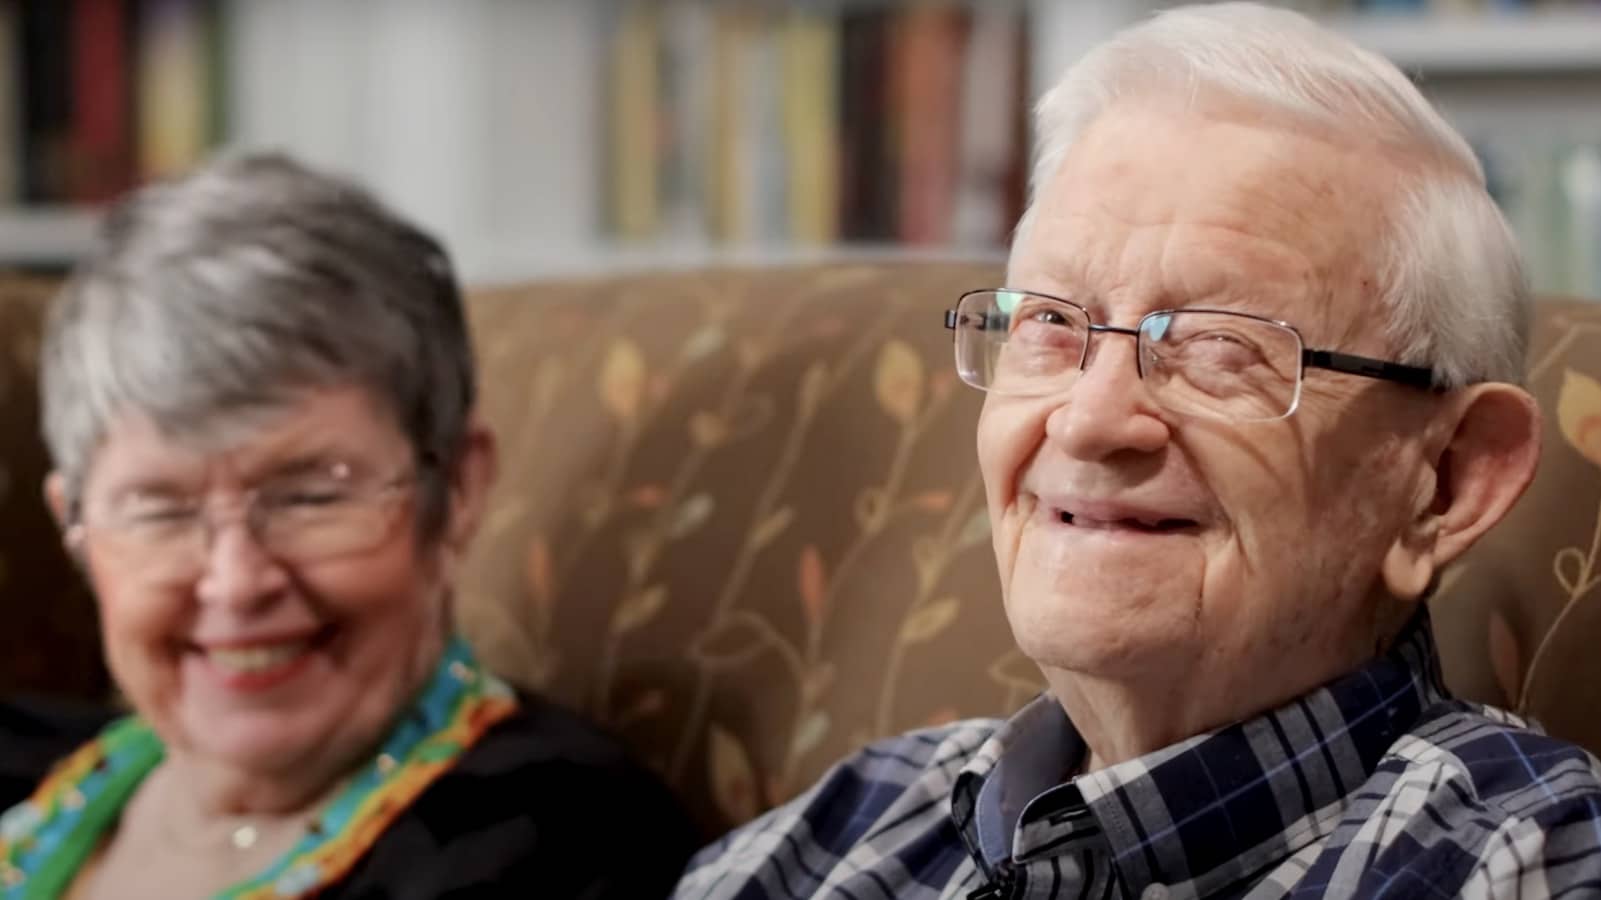 Pegasus Senior Living | Mr. Robert and wife laughing on a sofa